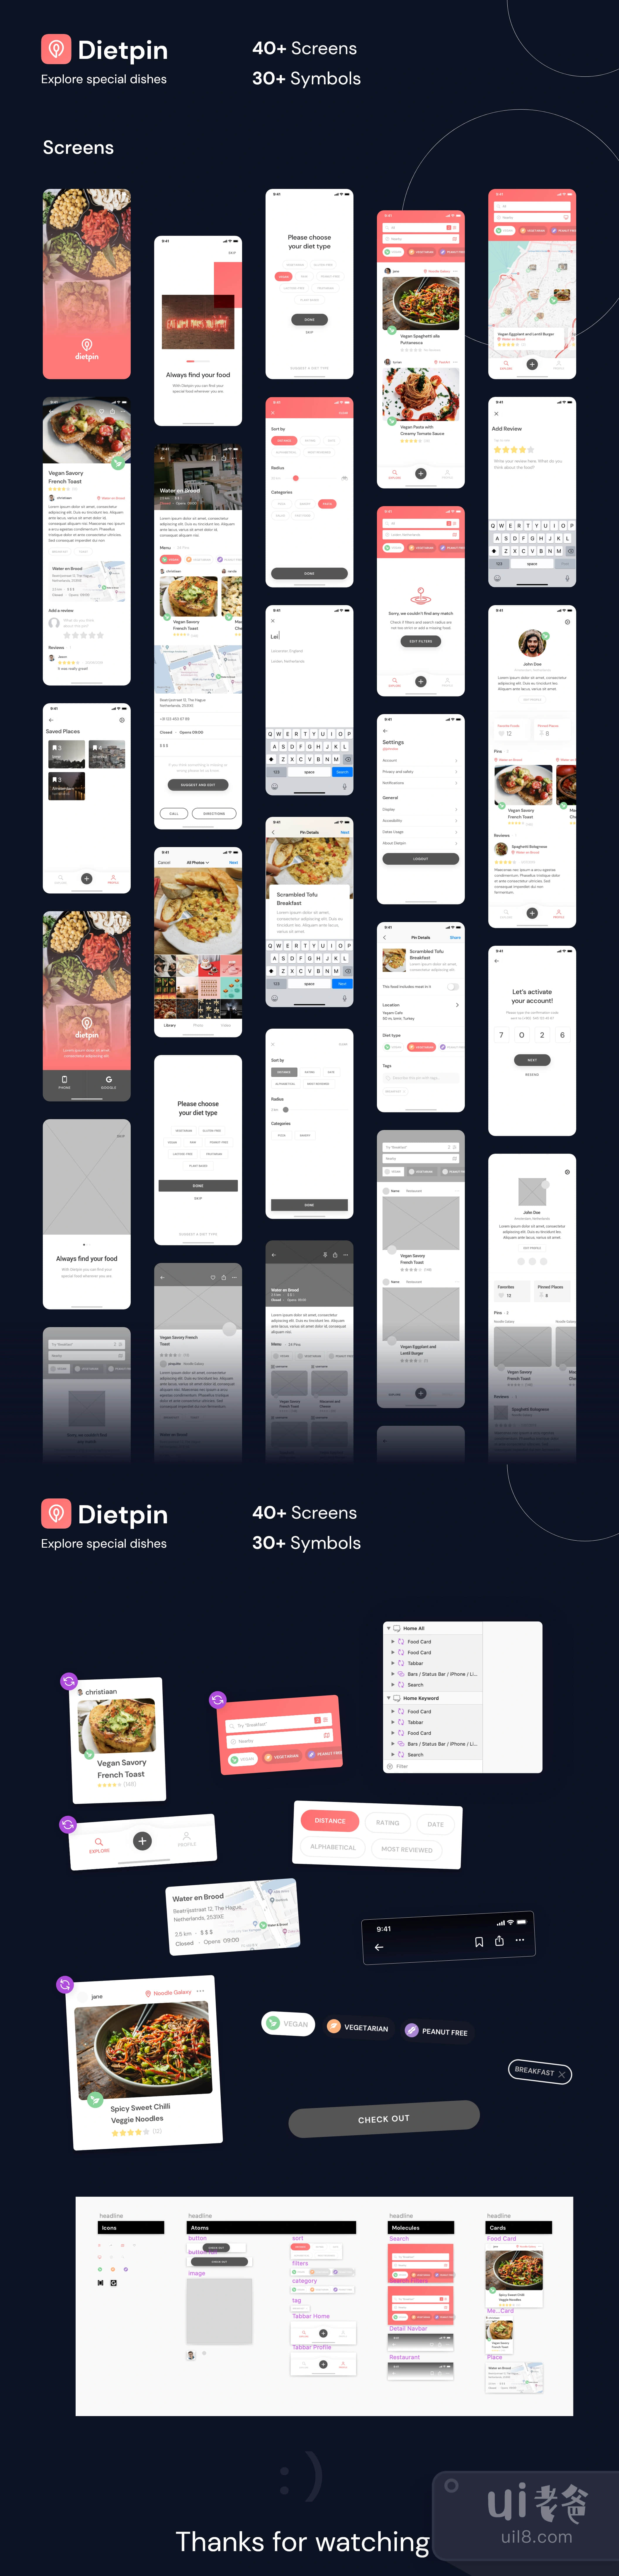 Dietpin 分享和寻找美食App设计插图